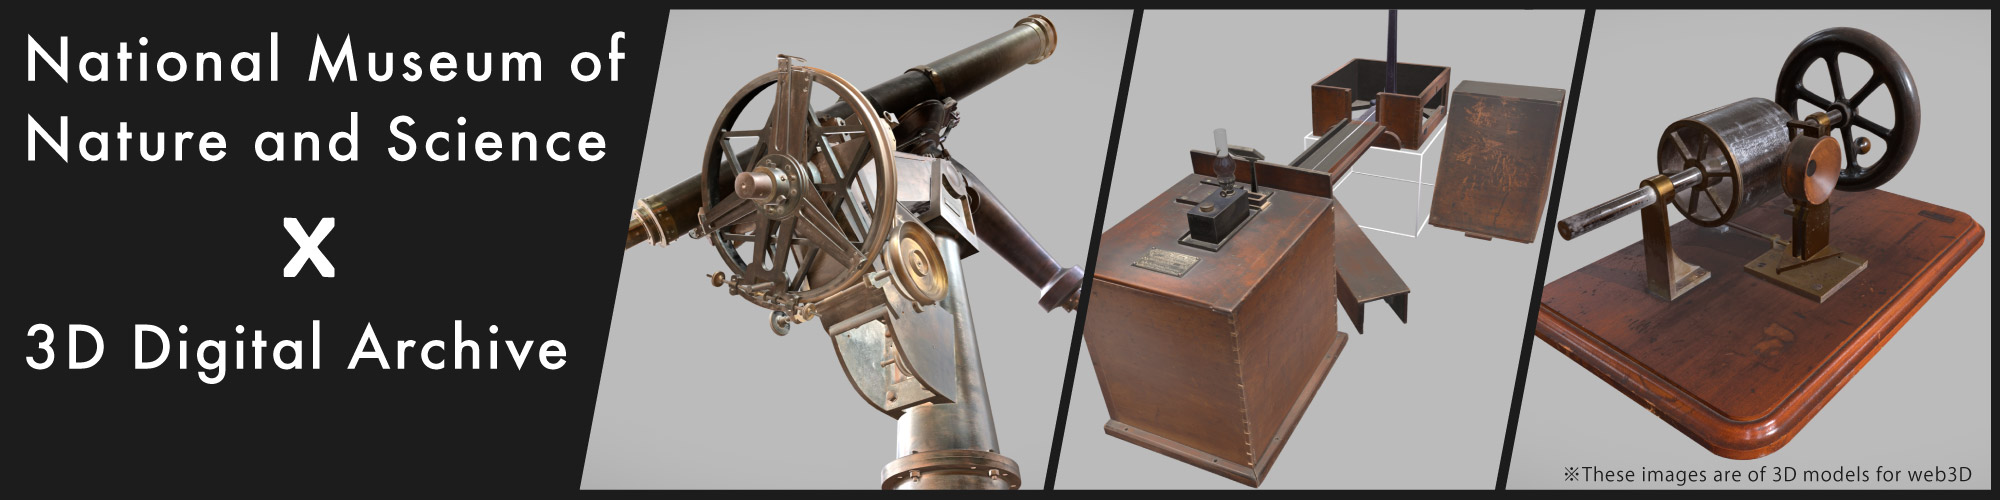 Troughton Astronomical Telescope, Milne Horizontal Pendulum Seismograph and Ewing's Voice Reproduction Device